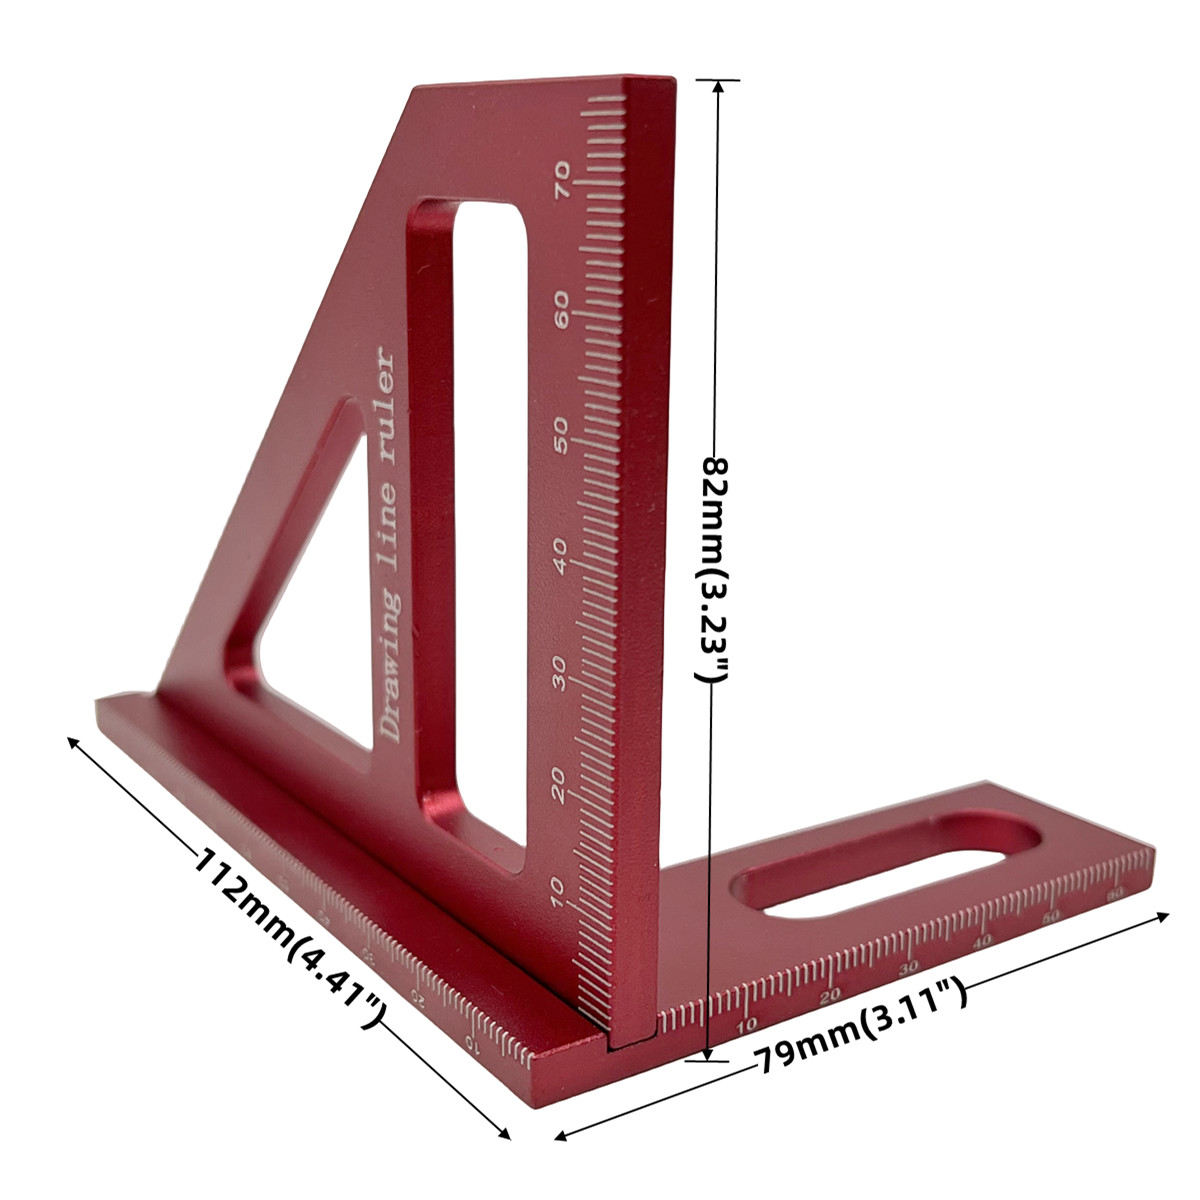 Right Angle Ruler, 45 n 90 Degree Small Aluminum Alloy Triangle